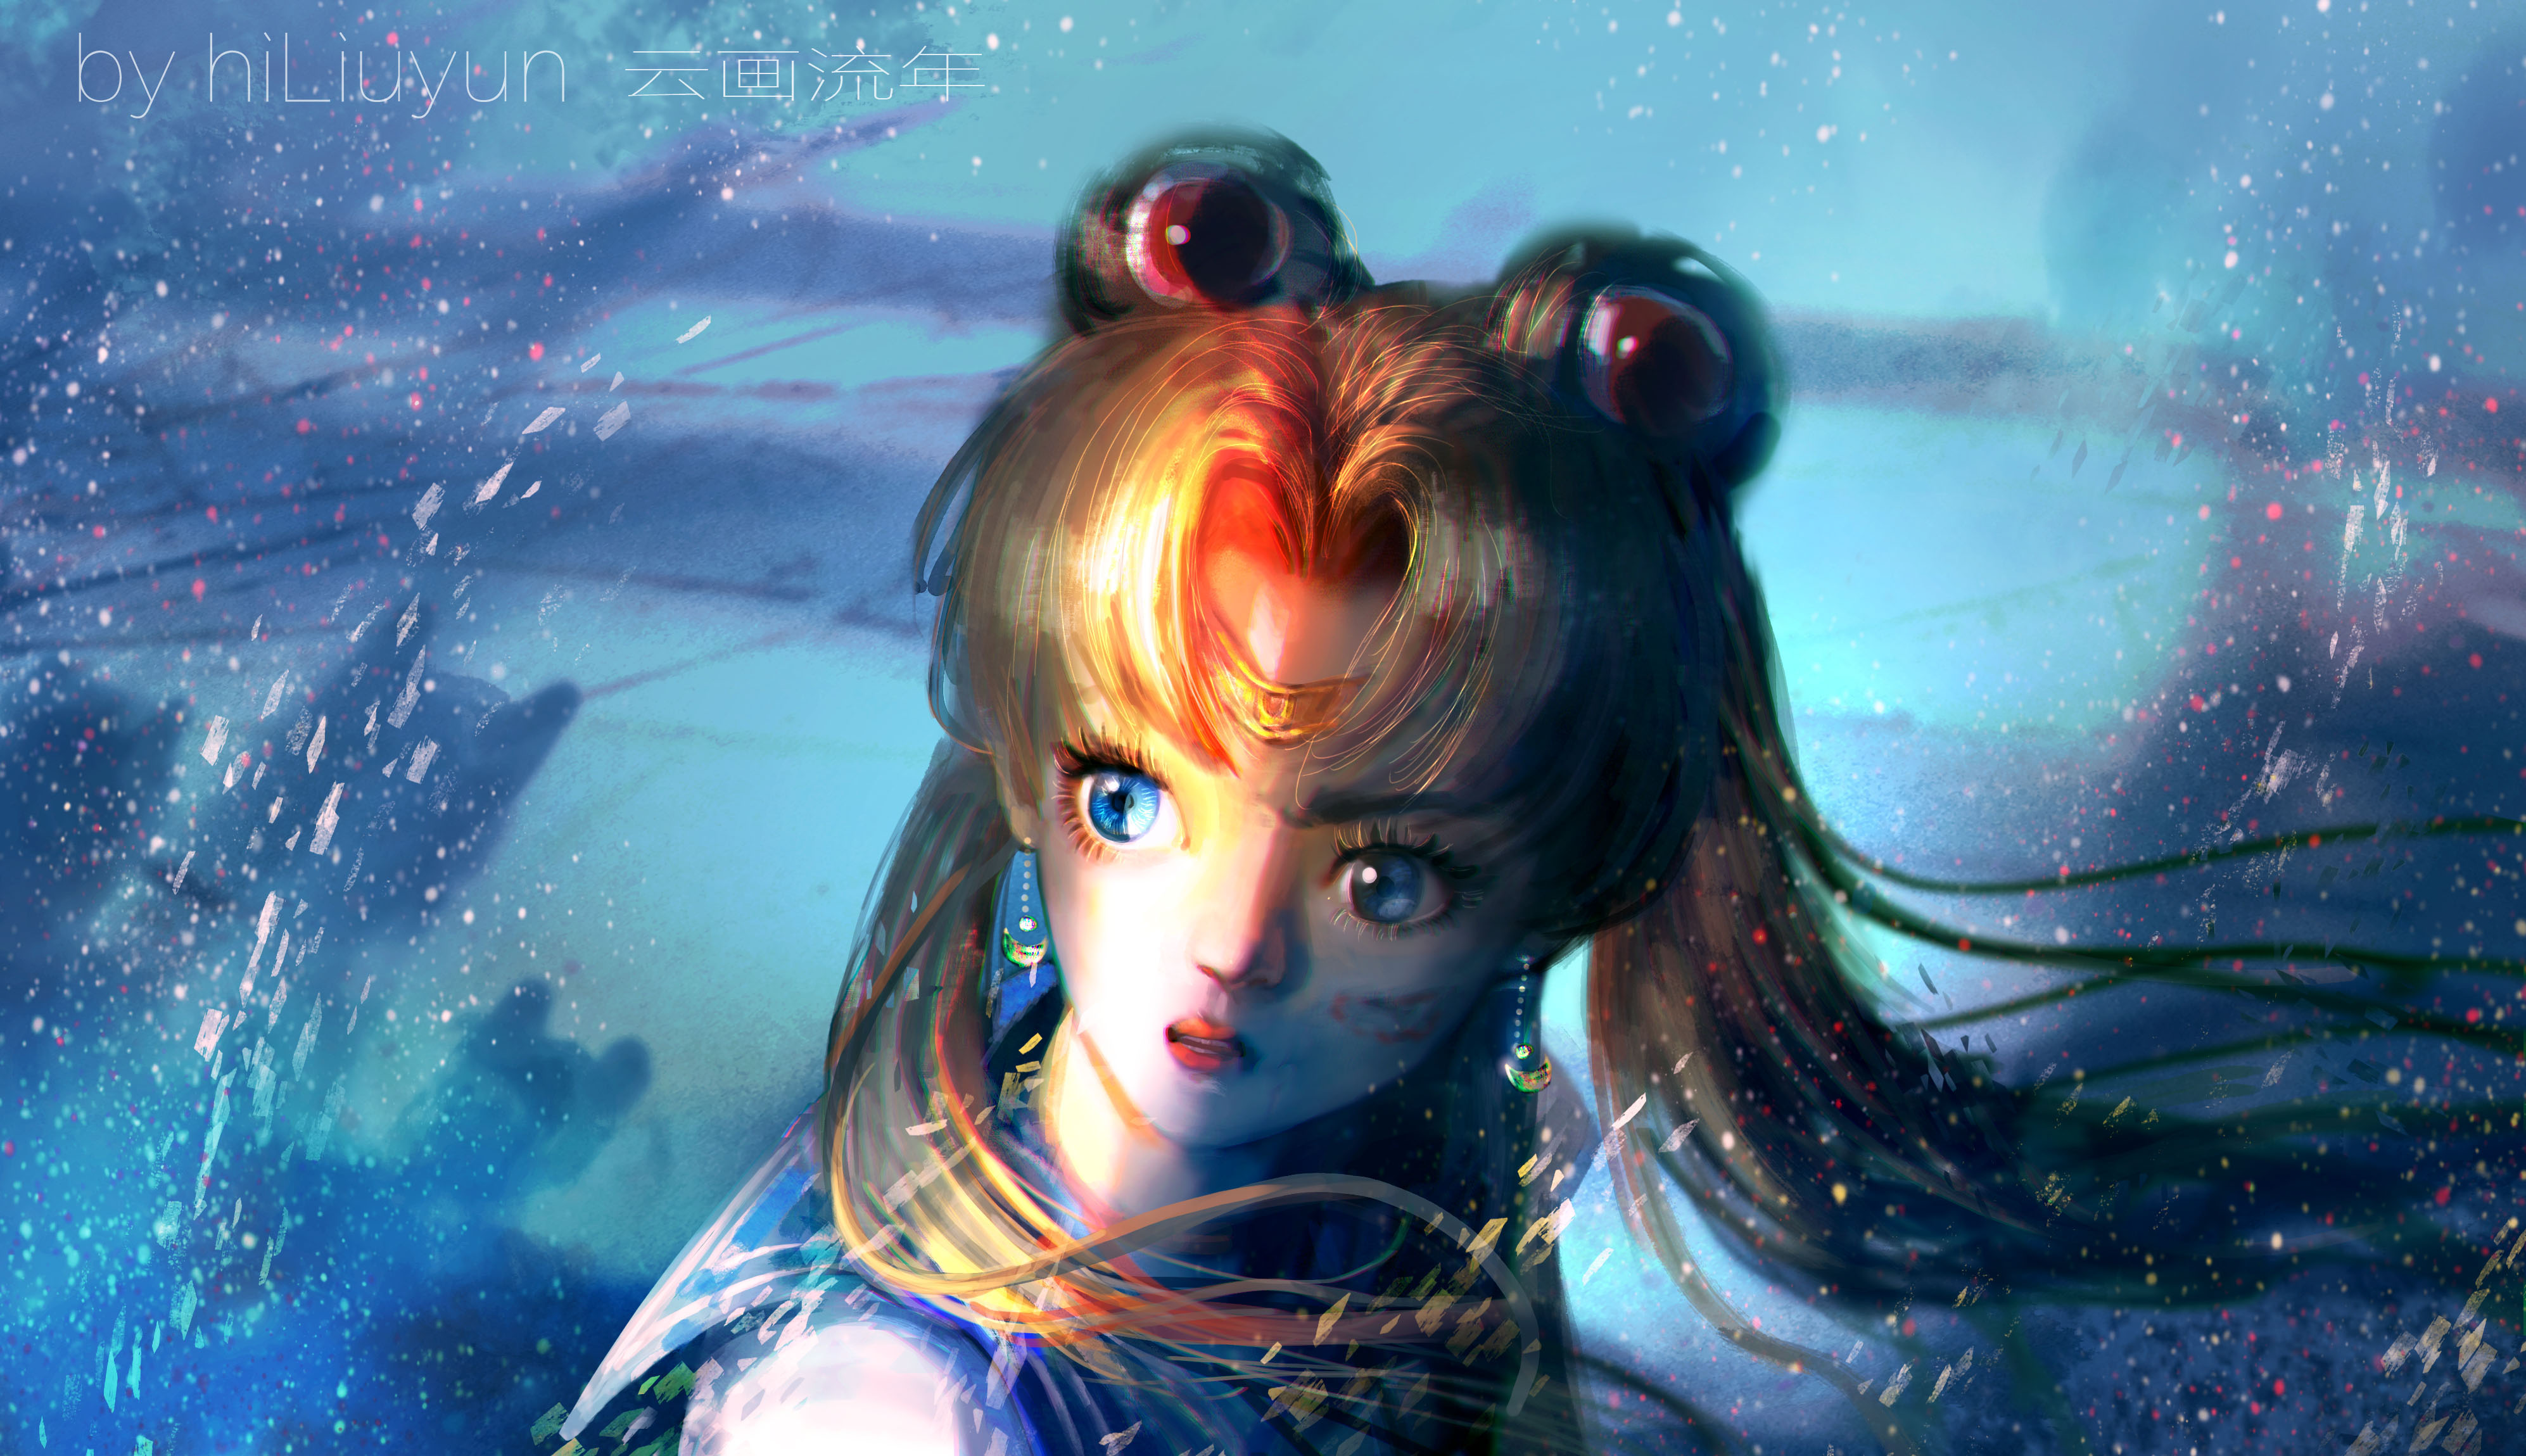 Sailor Moon Fantasy Girl Digital Art HiLiuyun 3988x2299